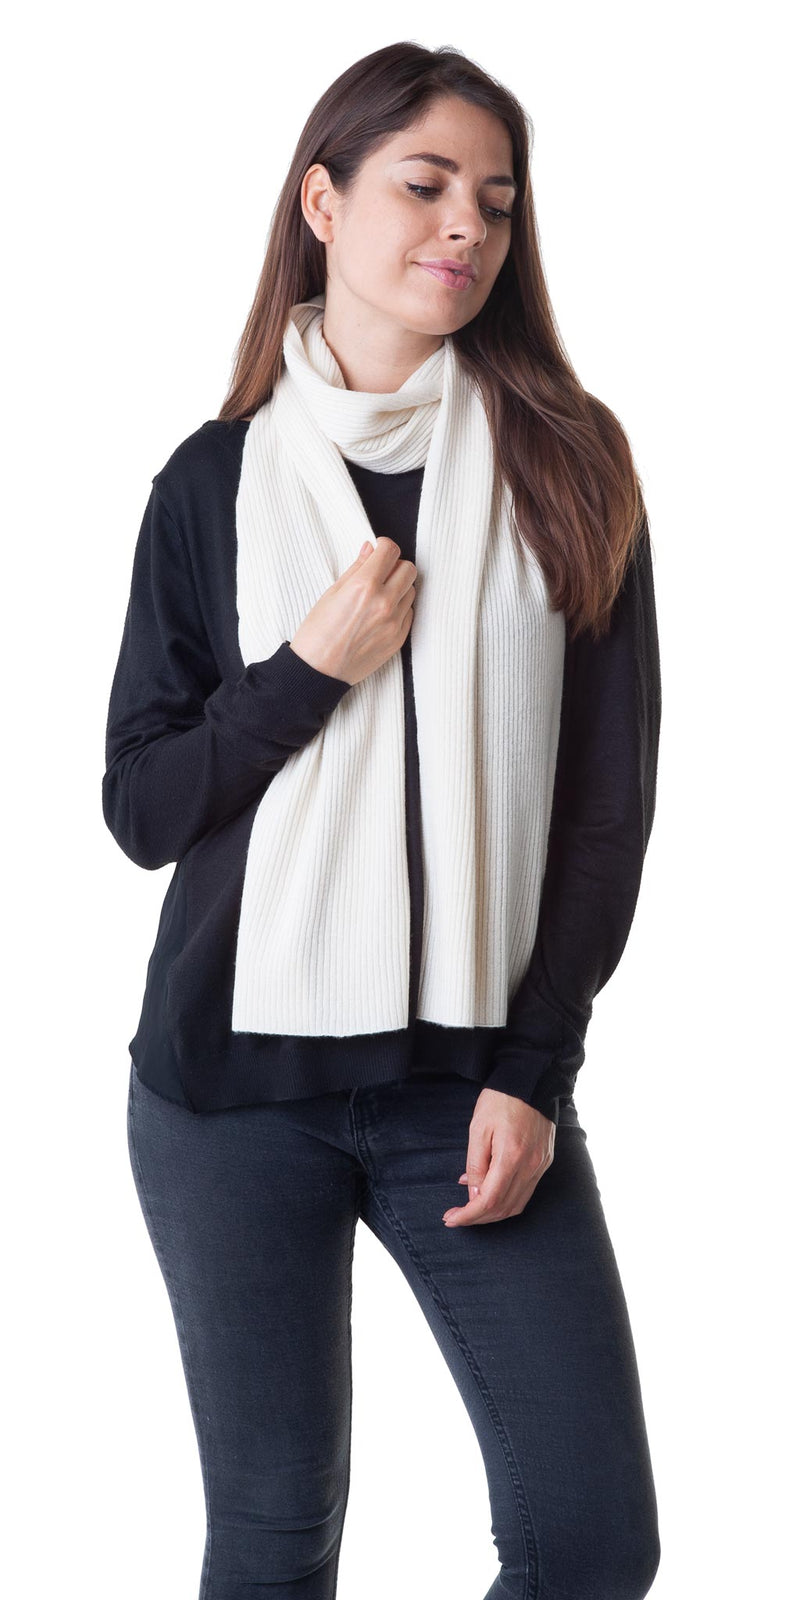 Cashmere Merino Scarf - Rib Knit - Soft Warm Stylish Winter Scarf for Women & Men - Ivory